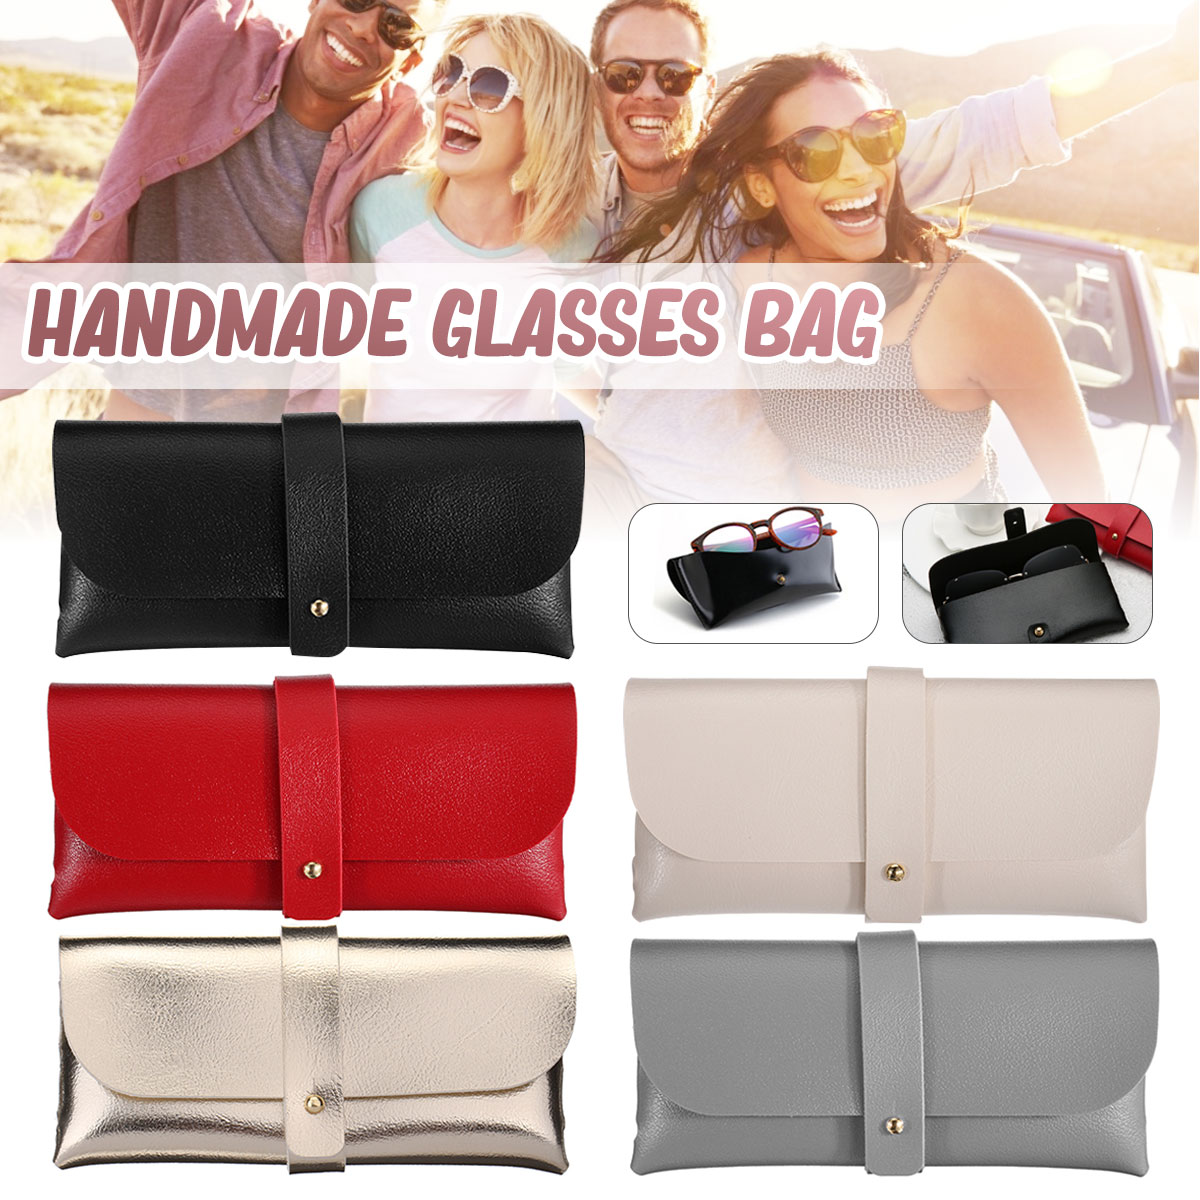 Fashion-Colorful-PVC-Leather-Handmade-Glasses-Pencil-Mobile-Phone-Storage-Bag-1782331-1